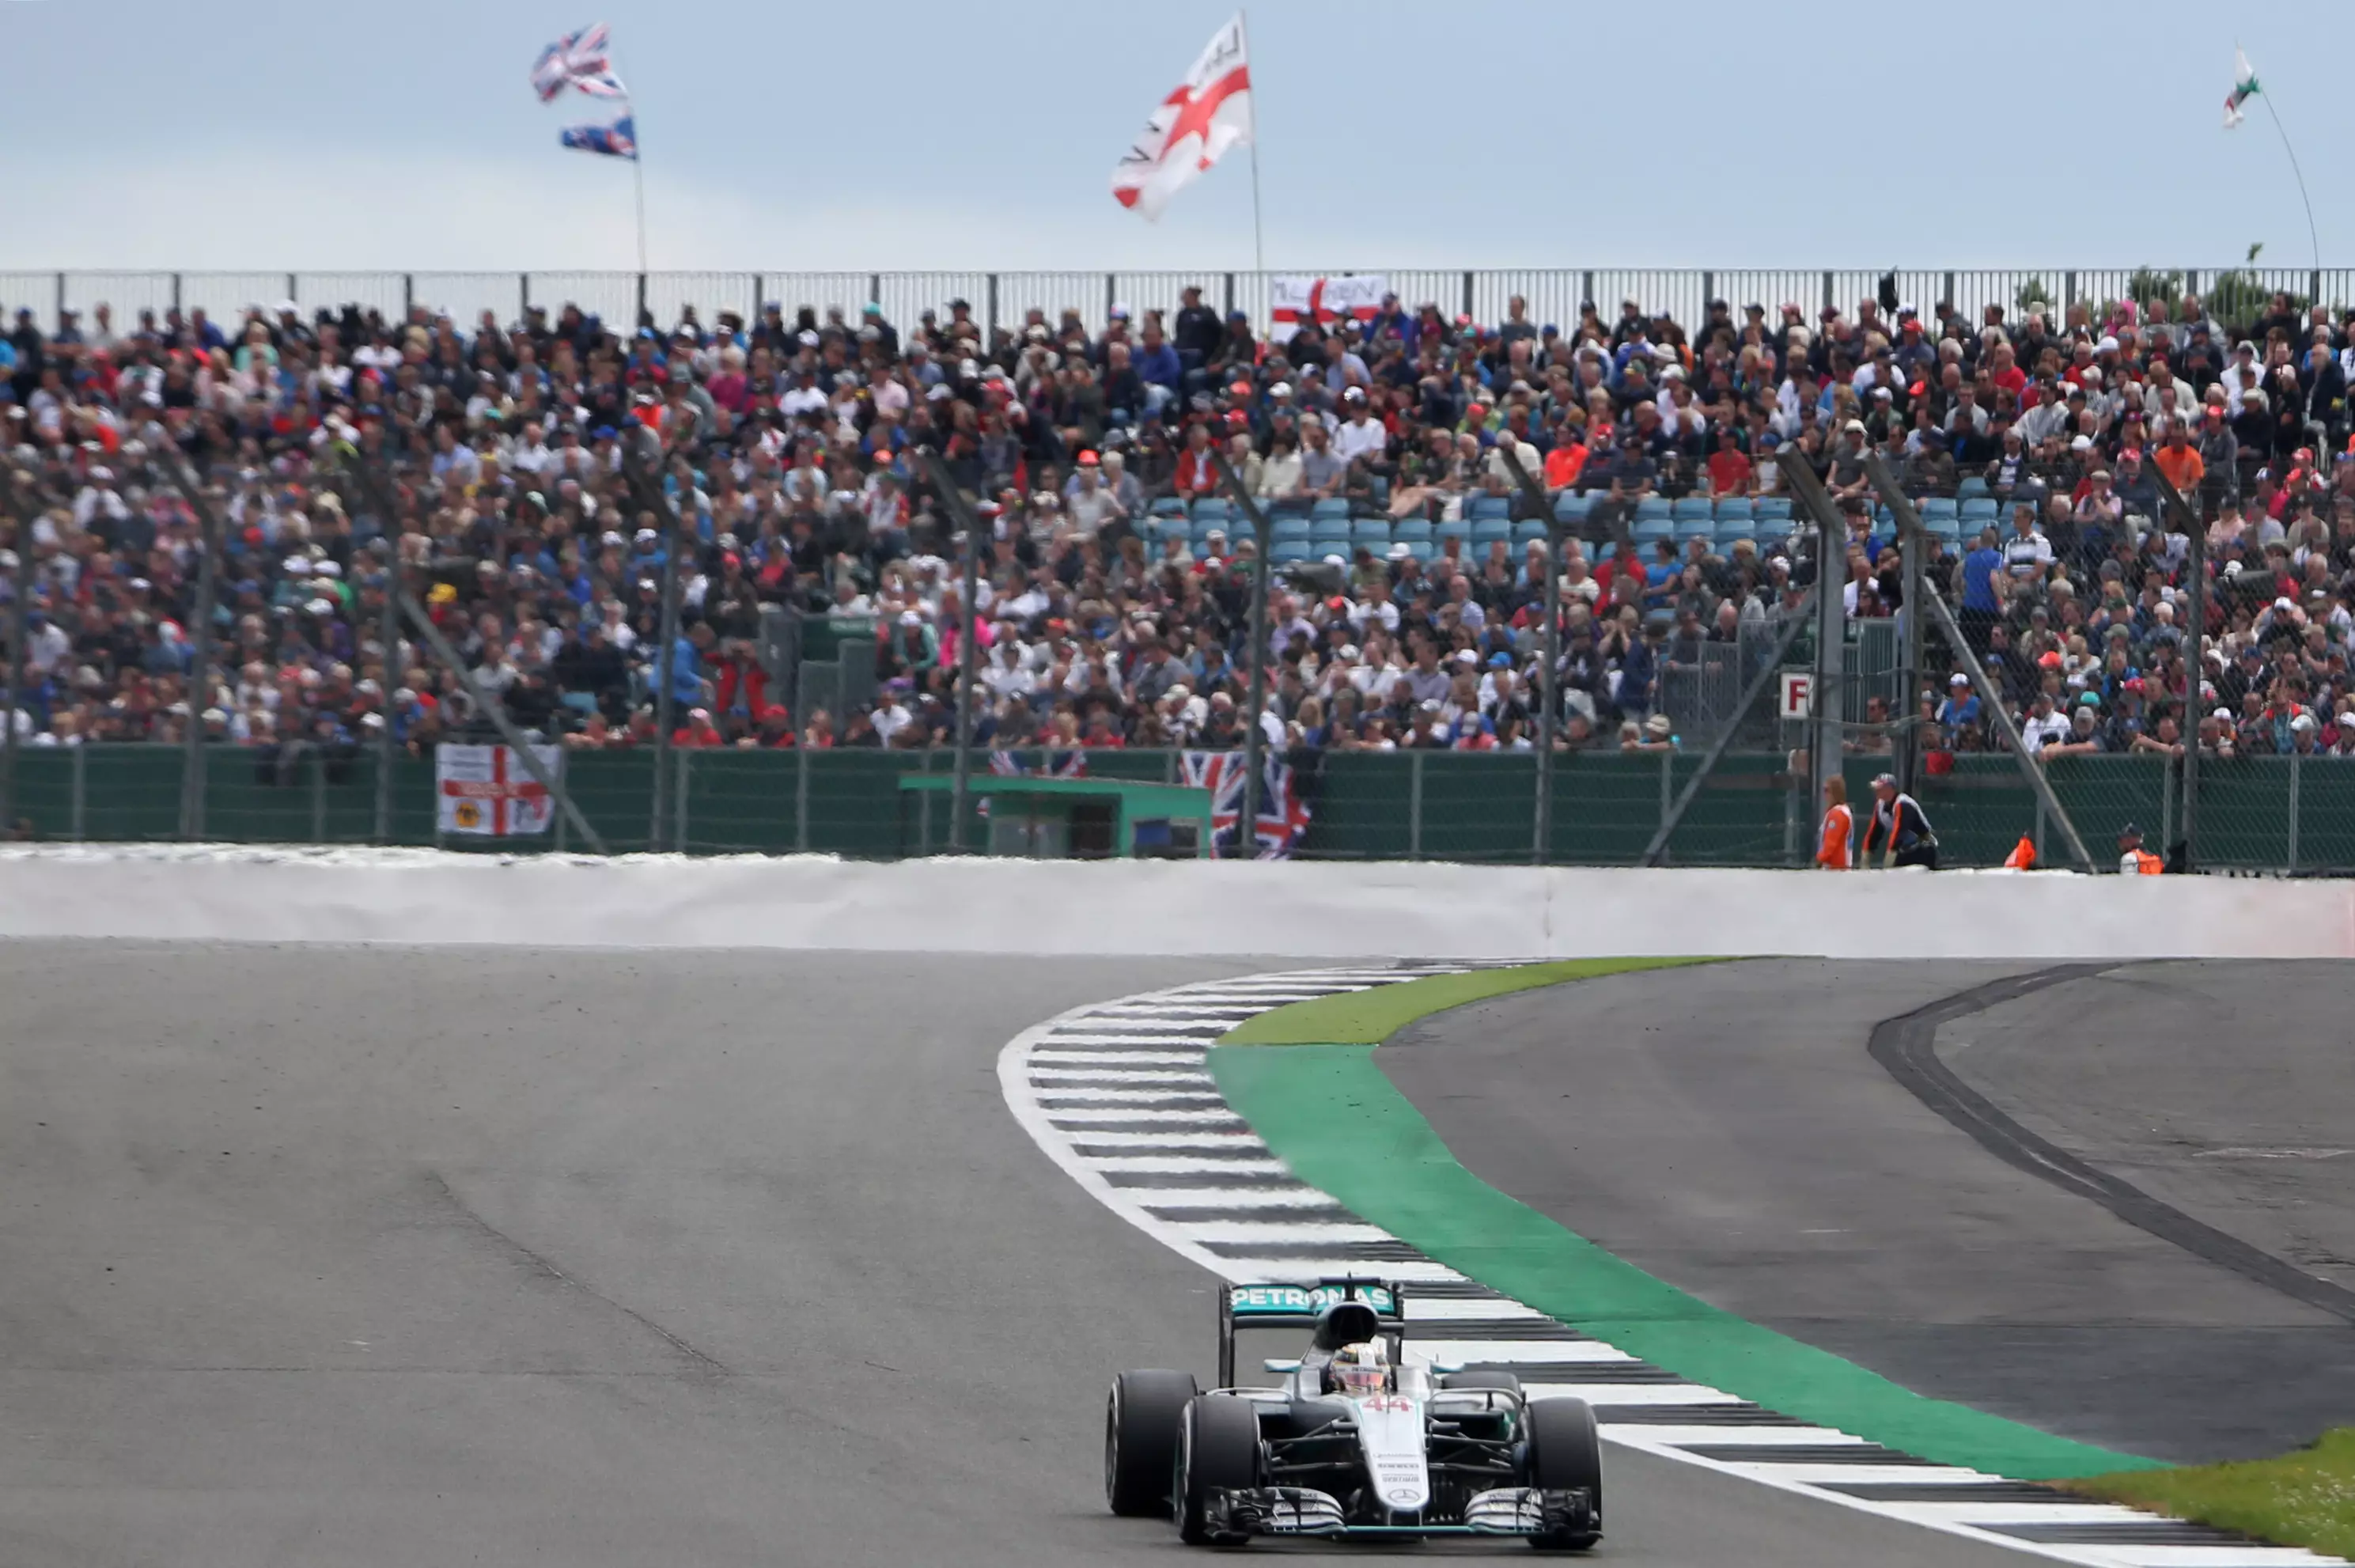 BREAKING: Lewis Hamilton Wins The British Grand Prix